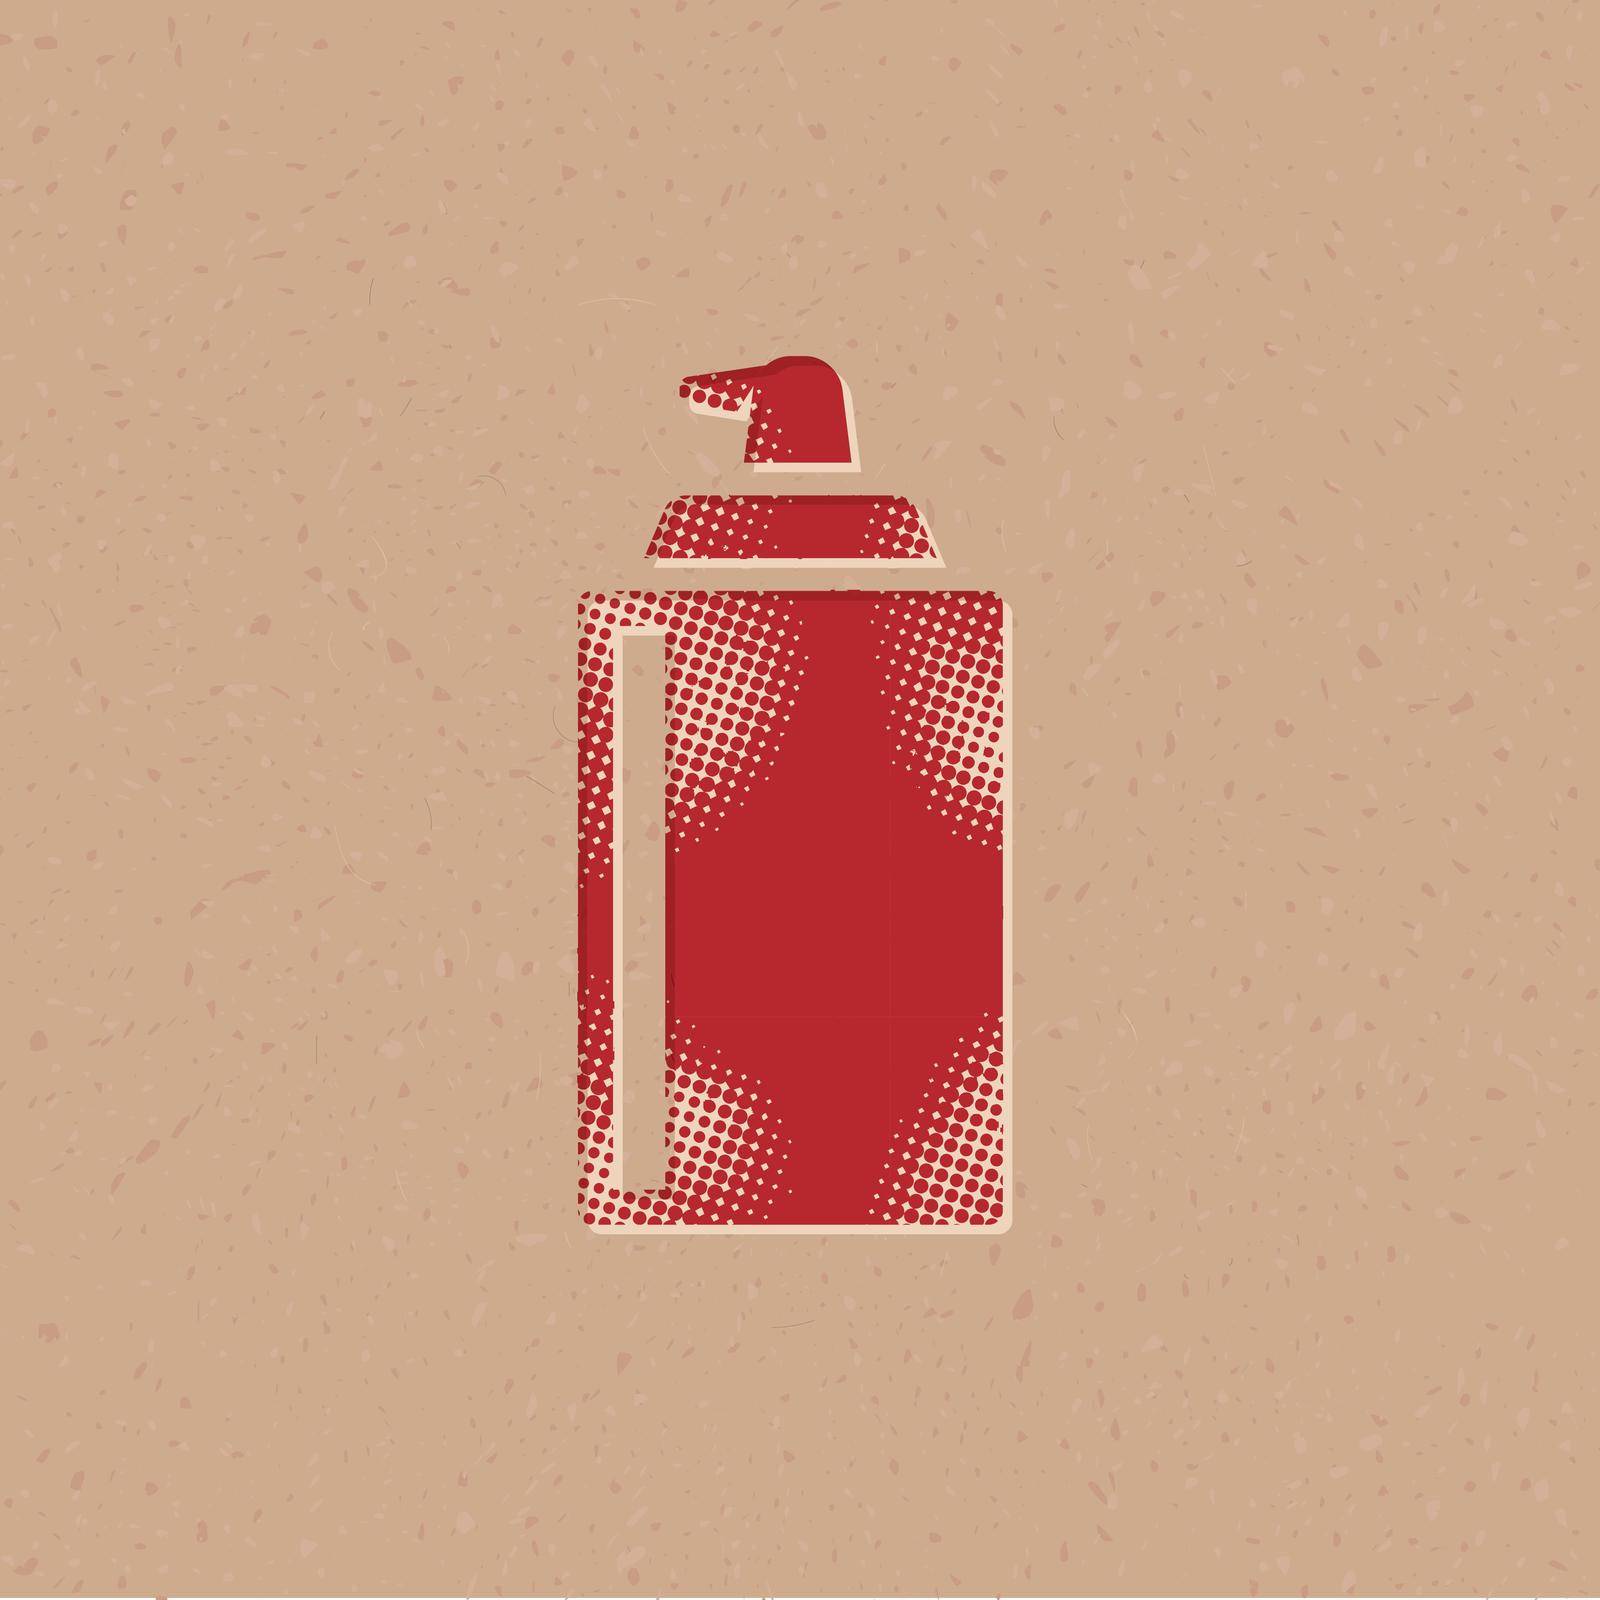 Liquid spray icon in halftone style. Grunge background vector illustration.